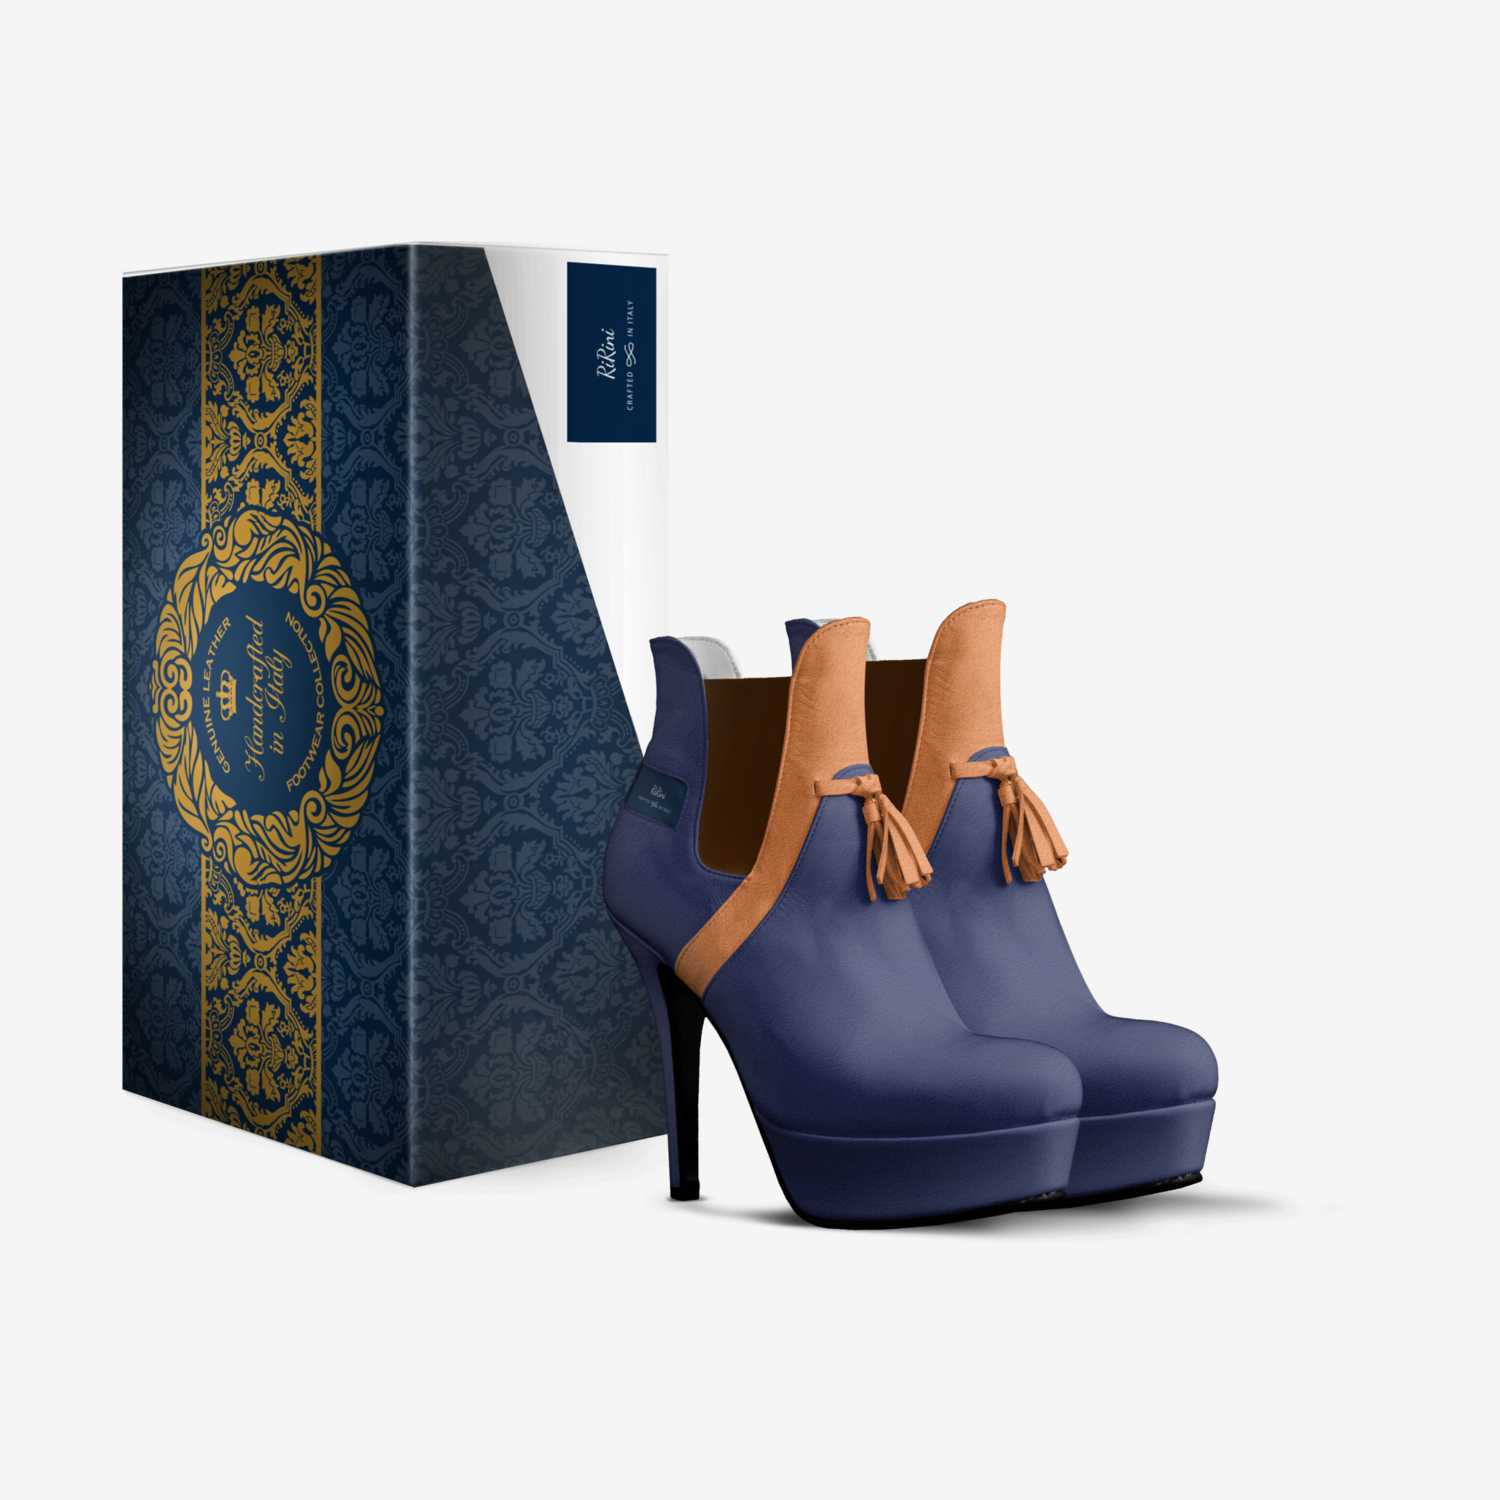 RiRini custom made in Italy shoes by Ririni | Box view